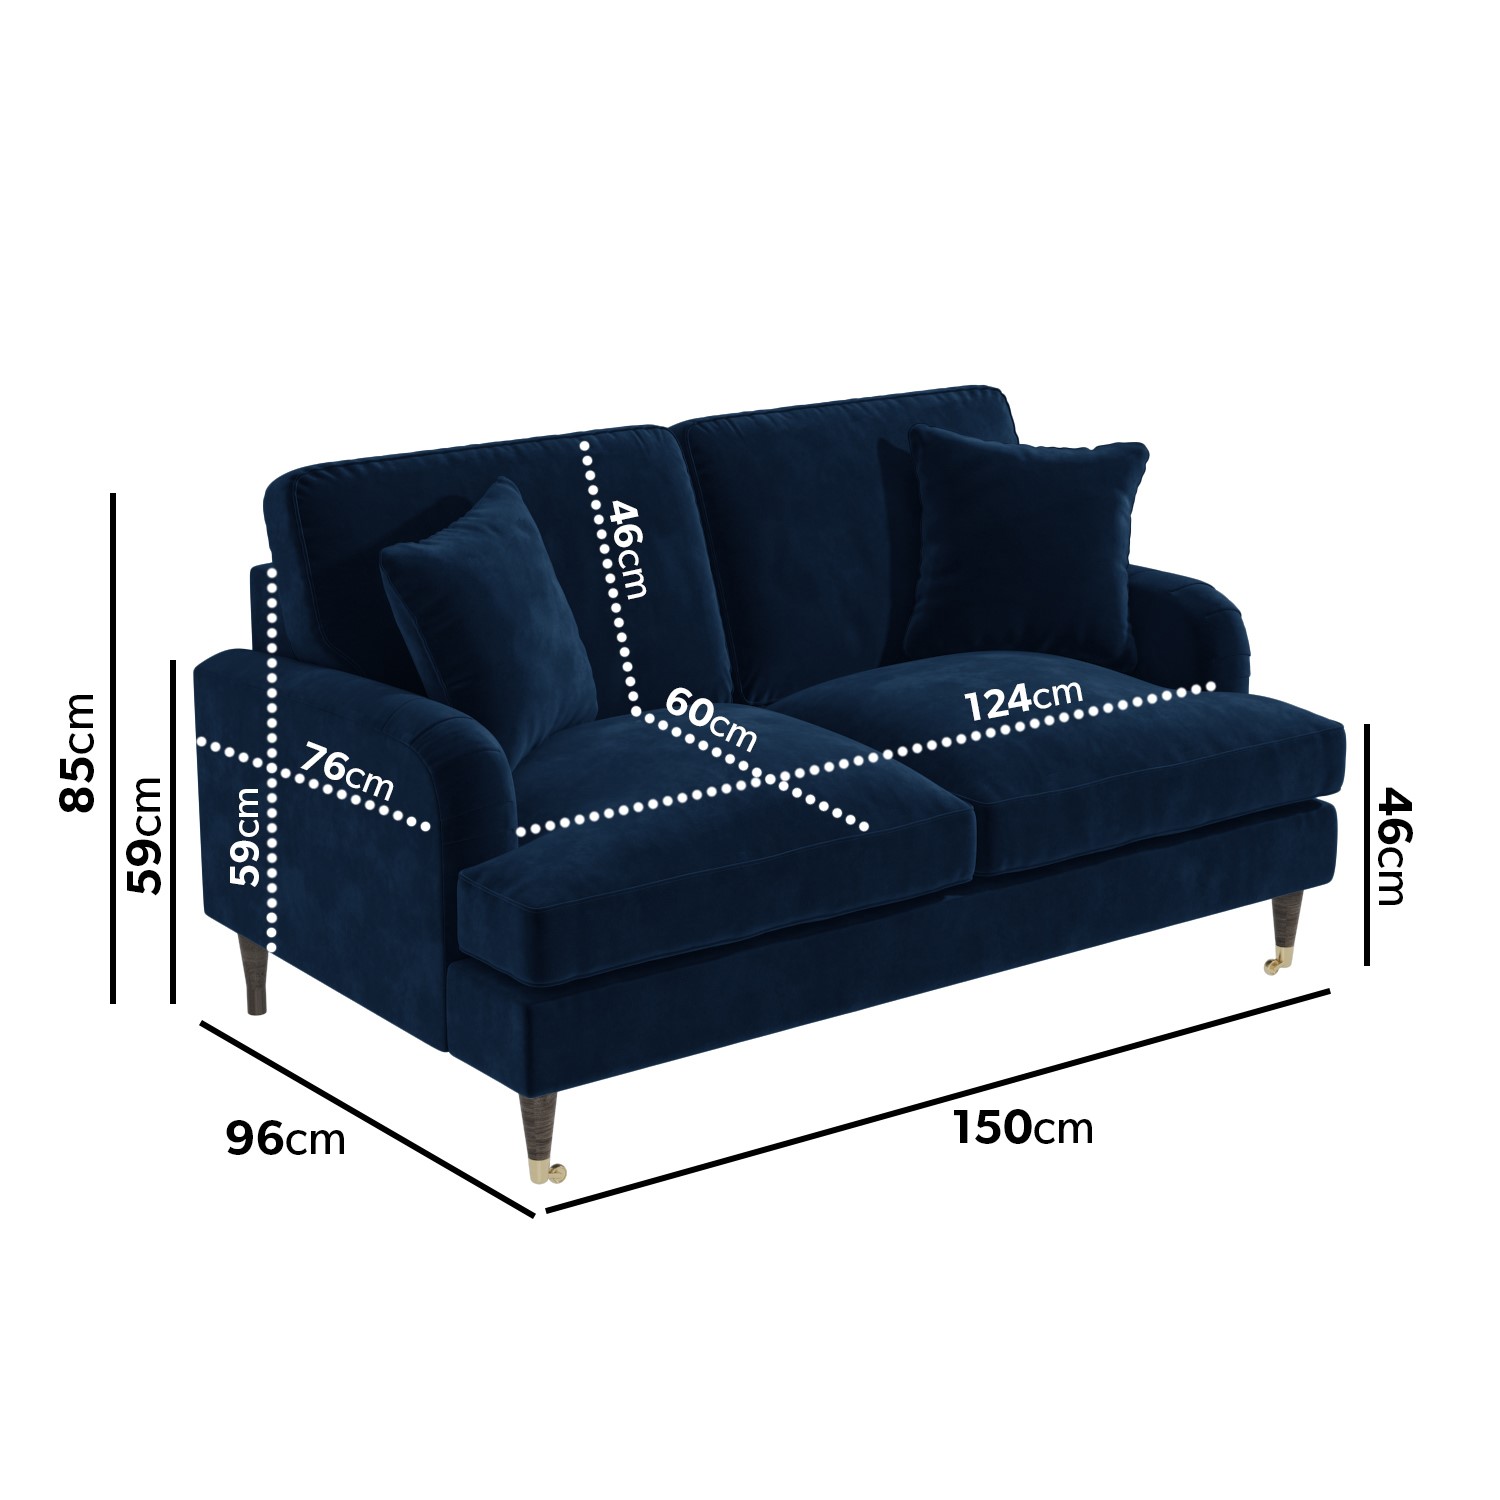 Read more about Navy velvet 2 seater sofa payton